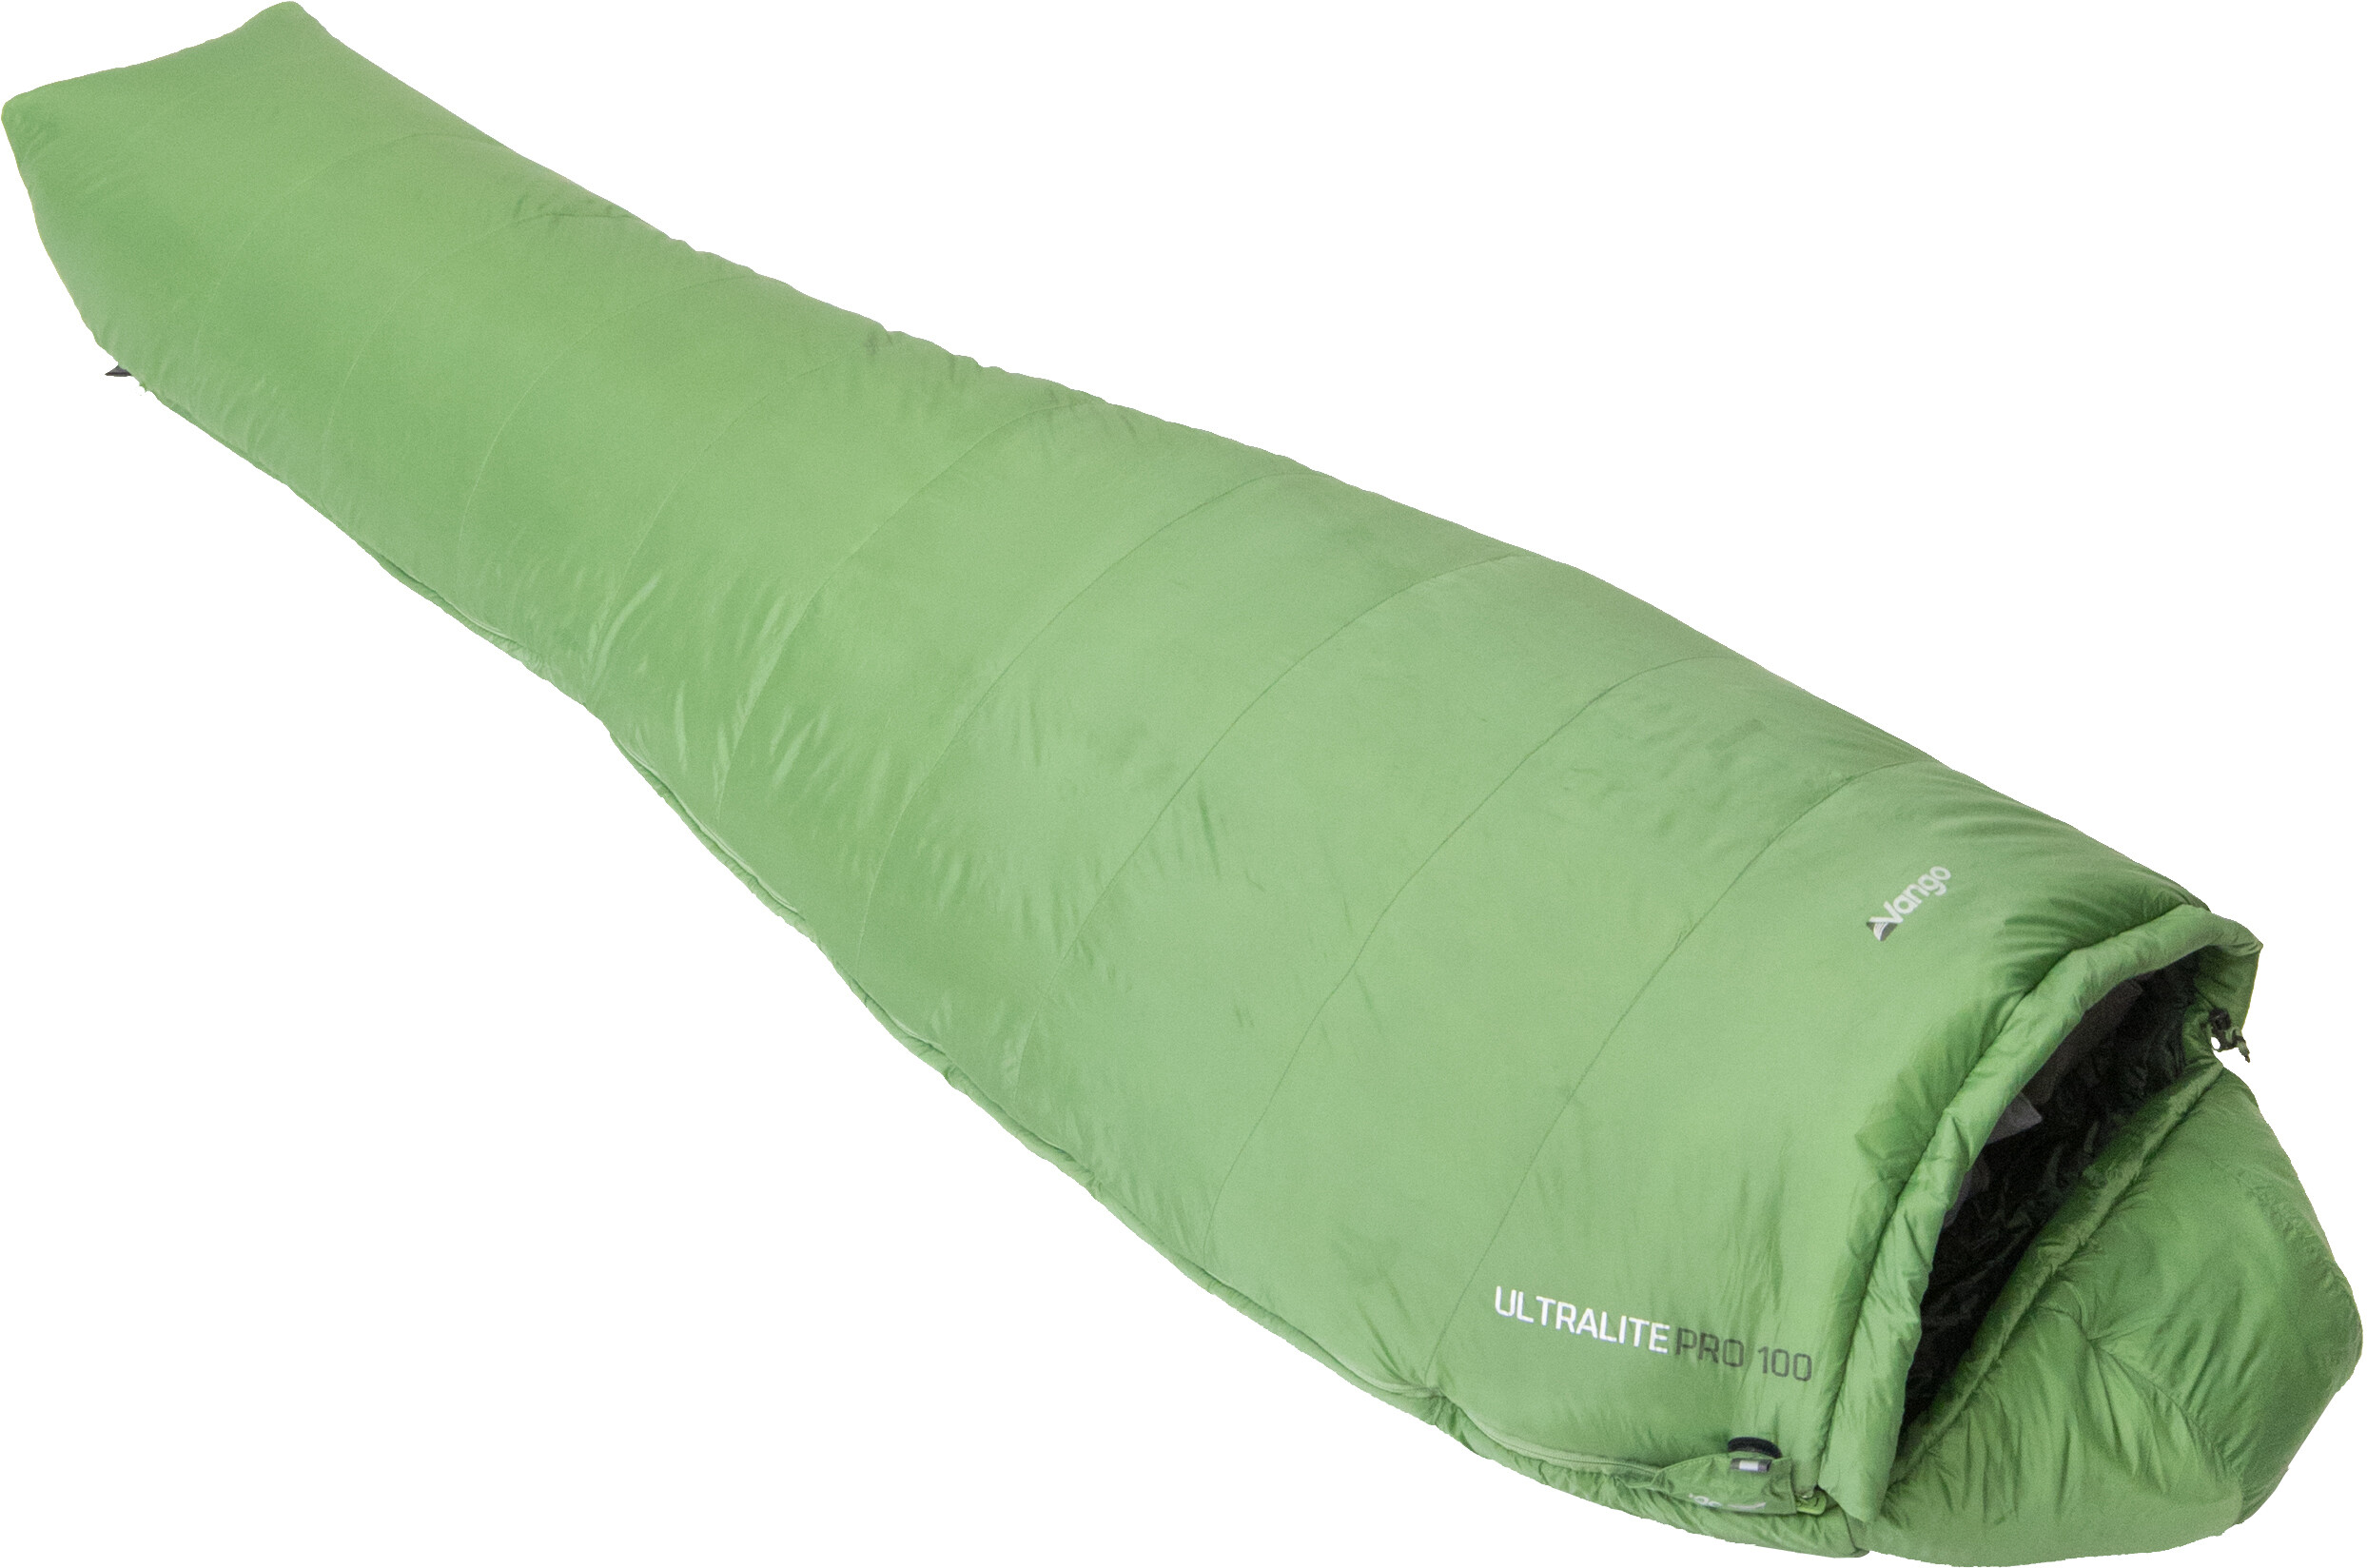 Vango Ultralite Pro 100 Sleeping Bag pamir green | Addnature.co.uk